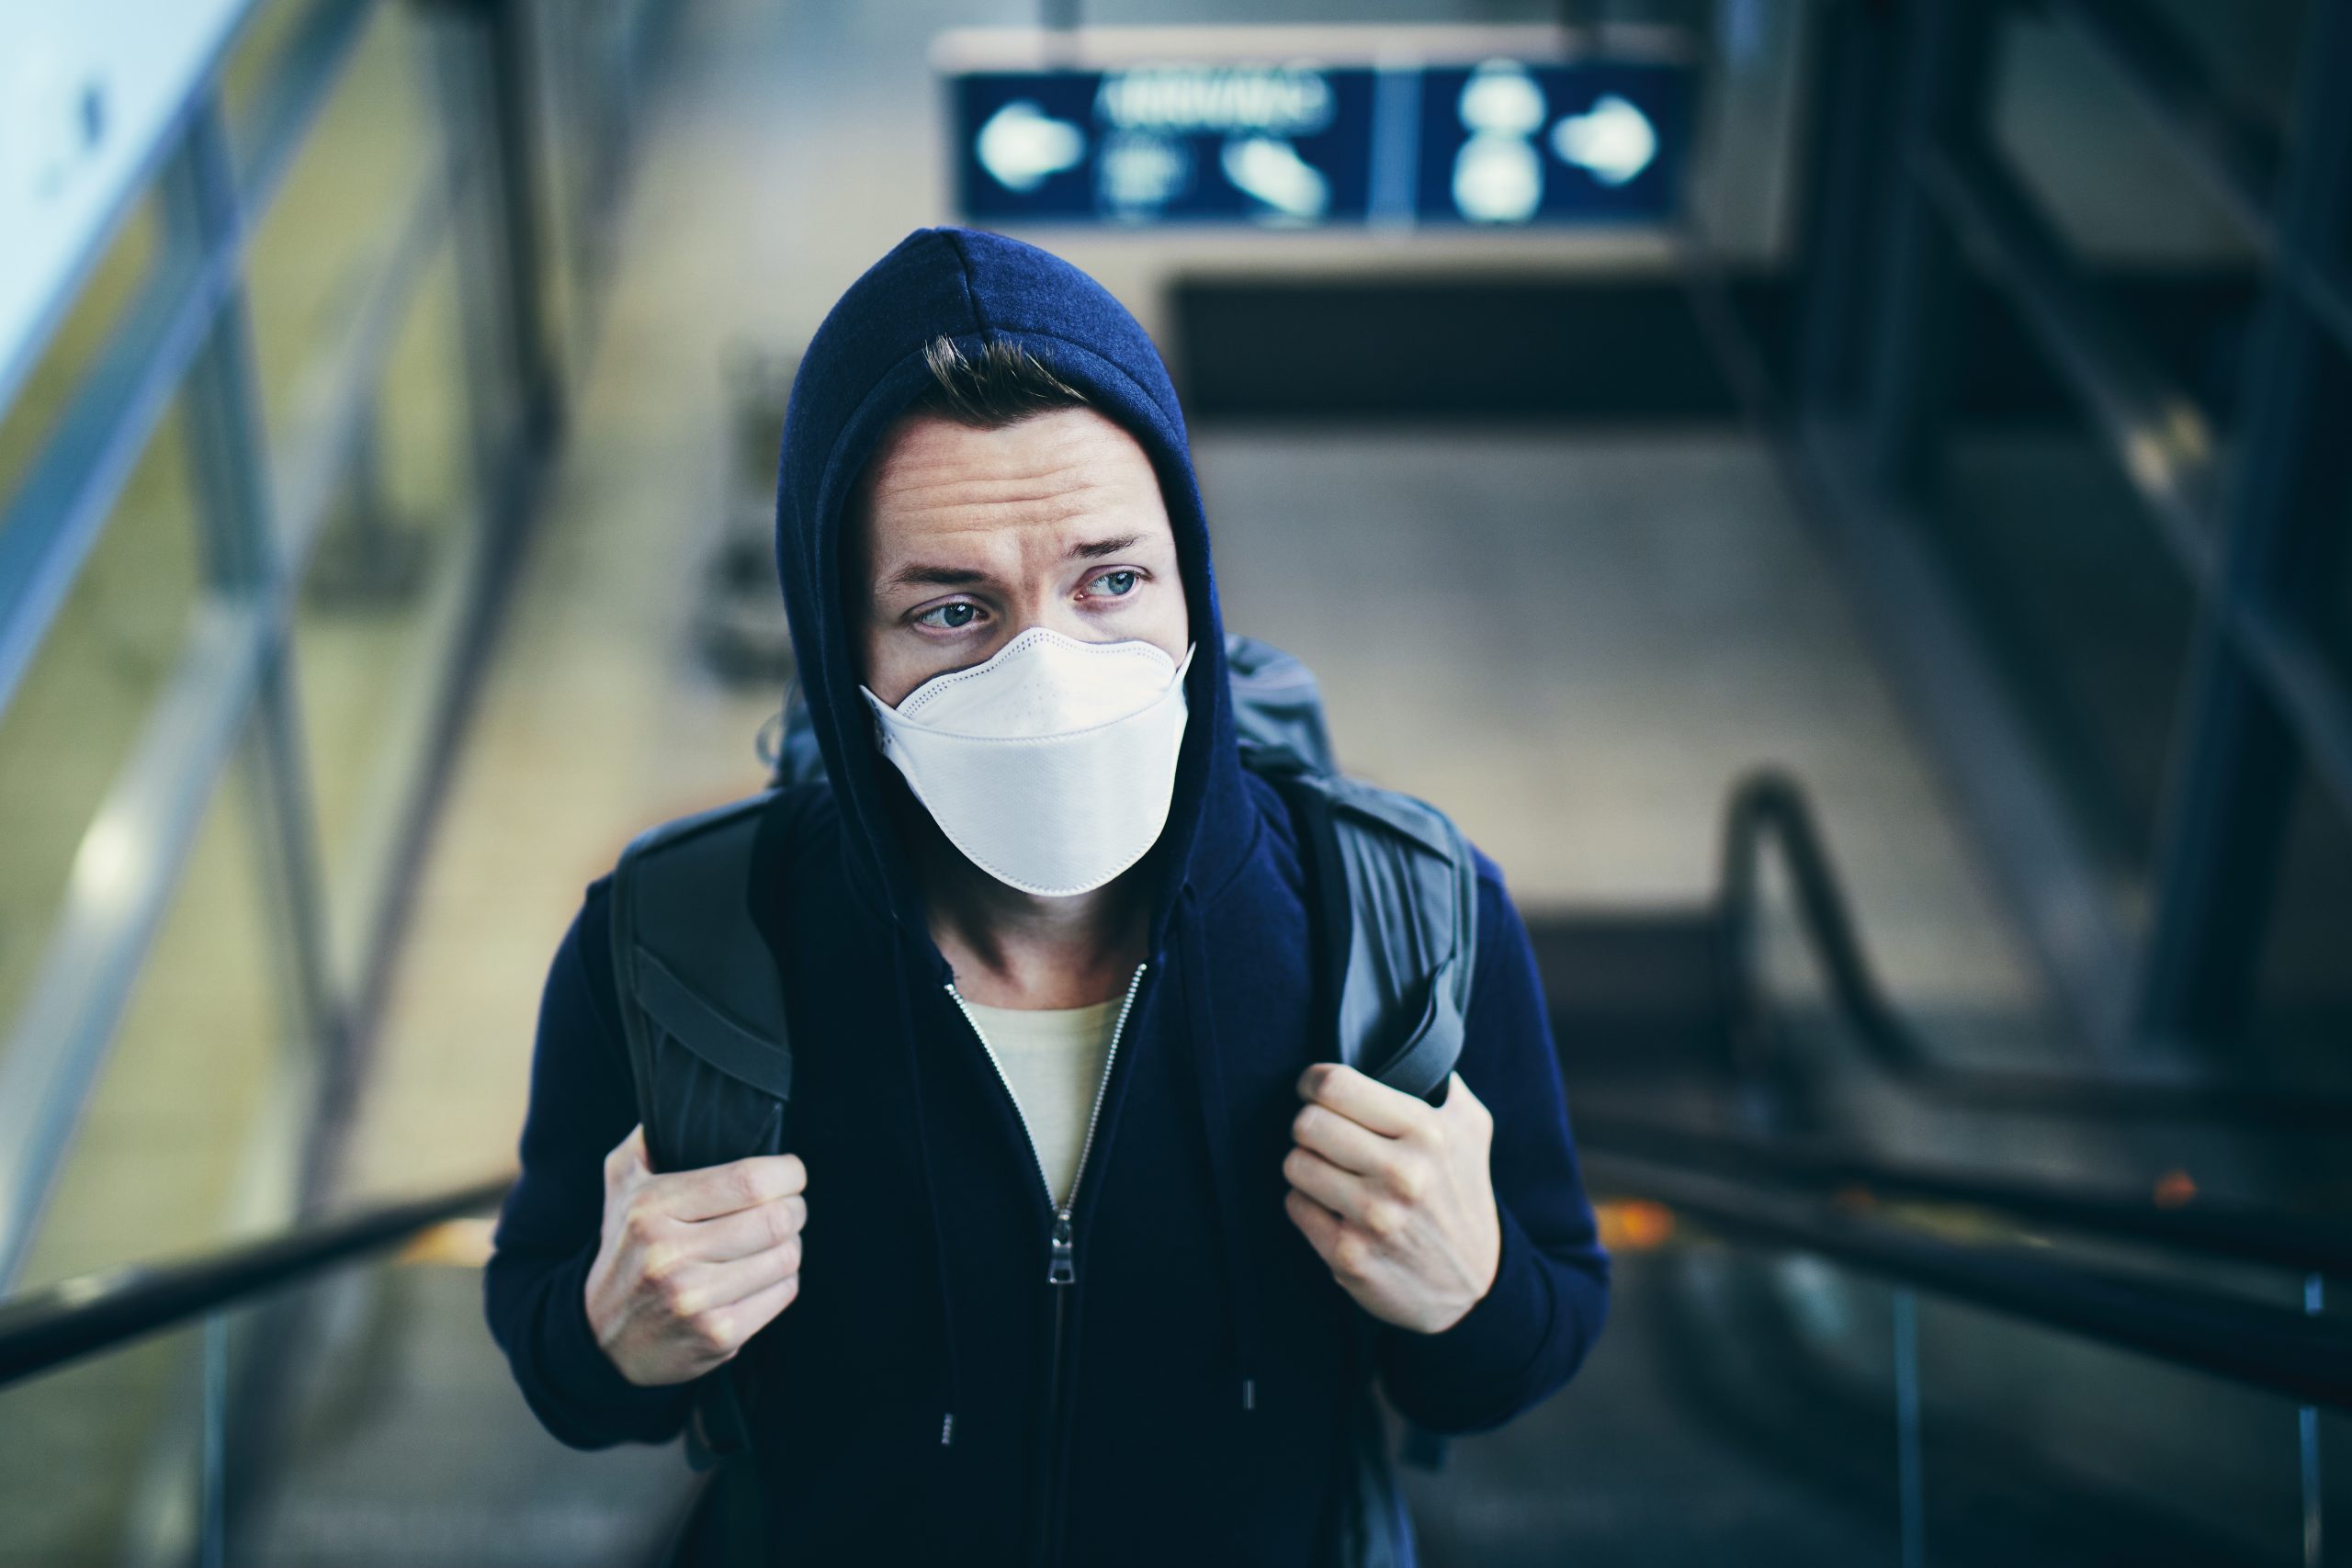 Man wearing face mask on escalator